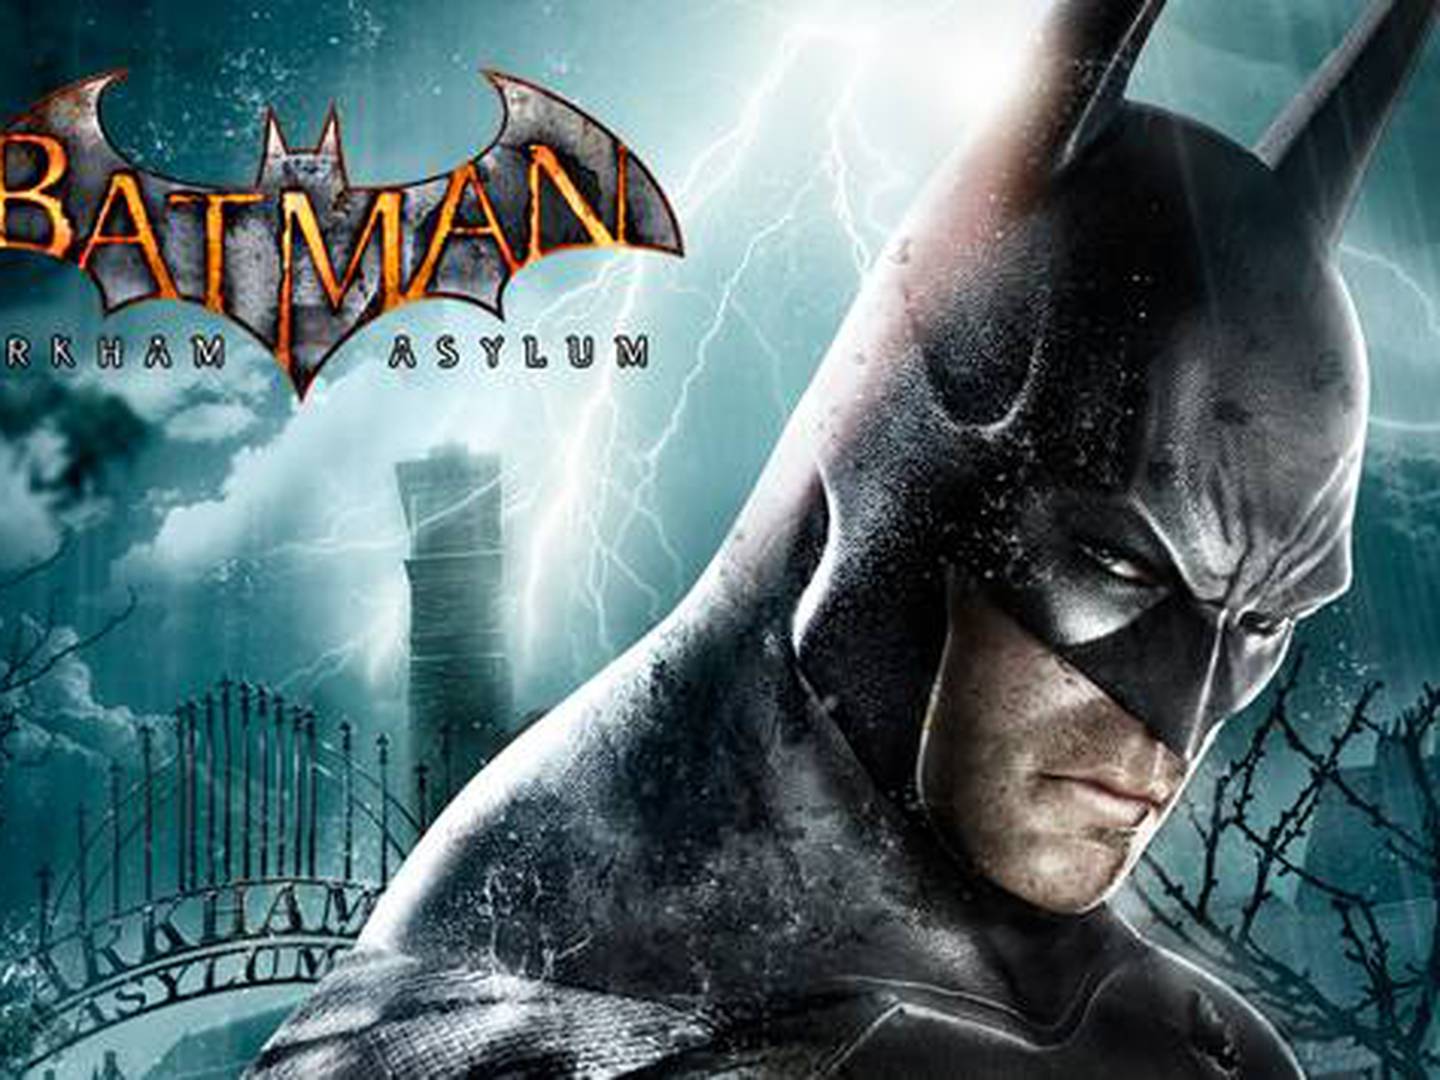 Batman: Arkham Asylum recibirá contenido descargable gratuito en nueve días  – FayerWayer